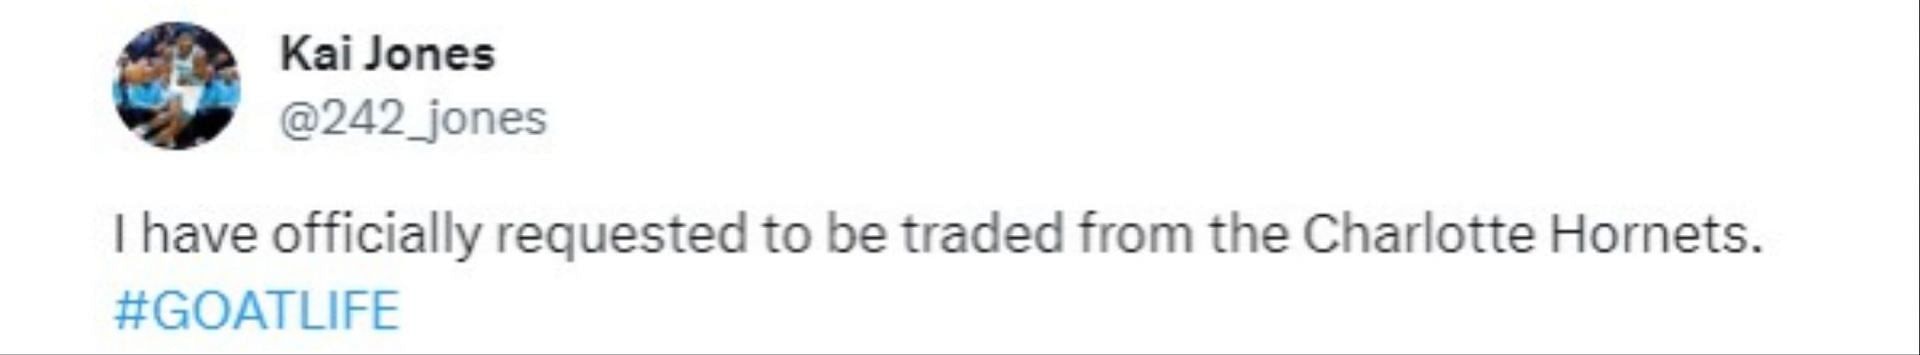 Jones publicly requesting a trade